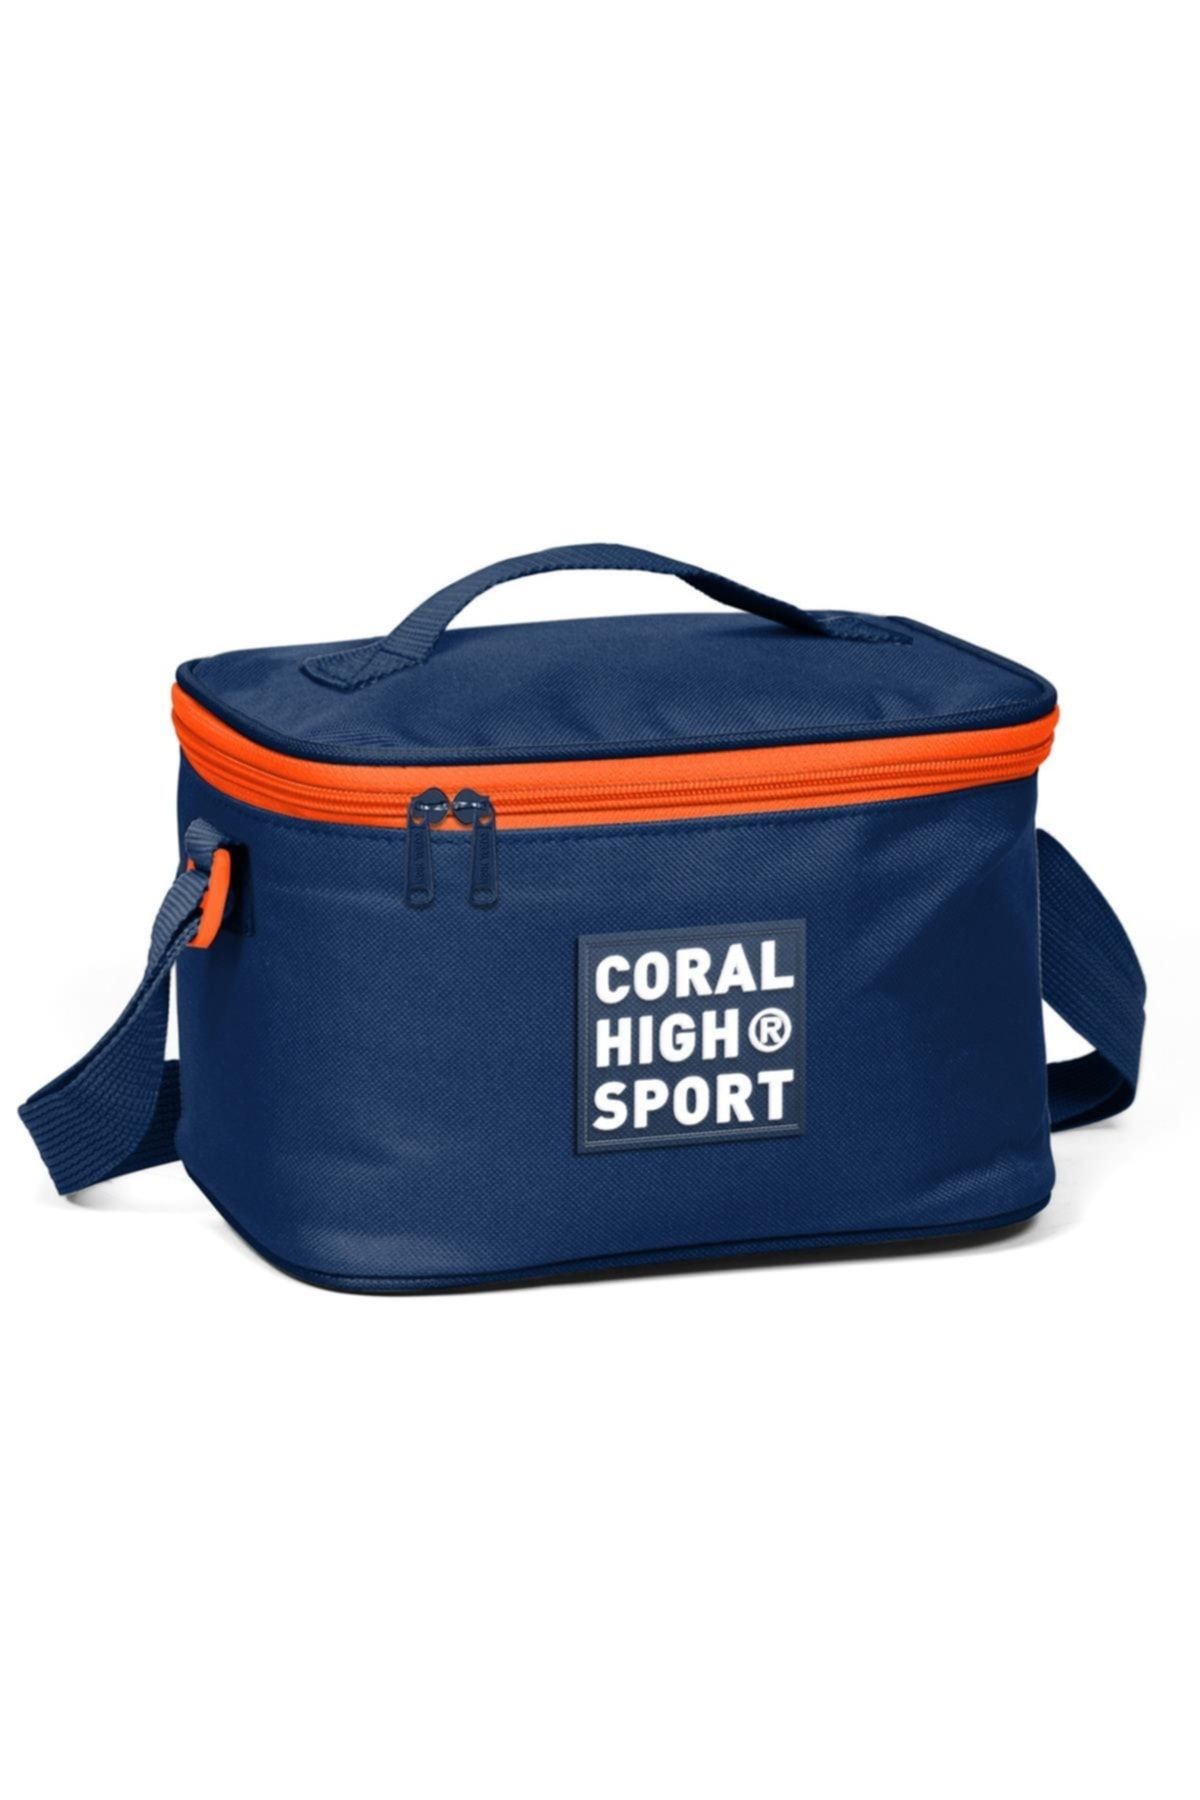 Coral High Sport Lacivert Thermo Beslenme Çantası 22806